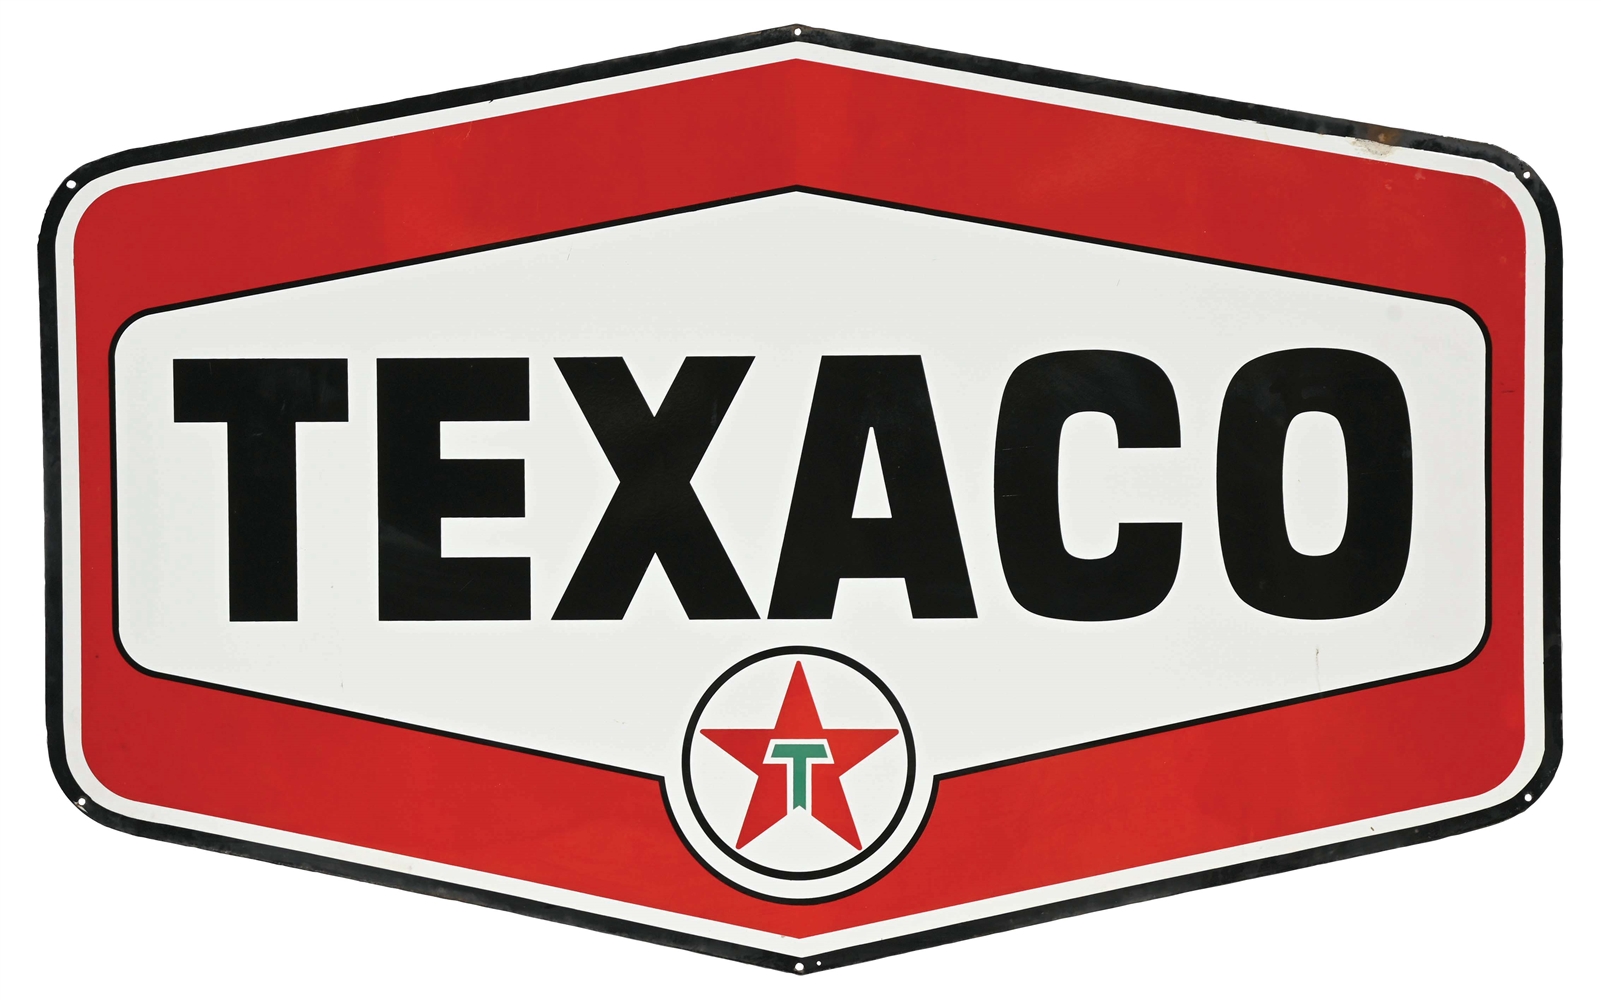 TEXACO PORCELAIN SERVICE STATION IDENTIFICATION SIGN.